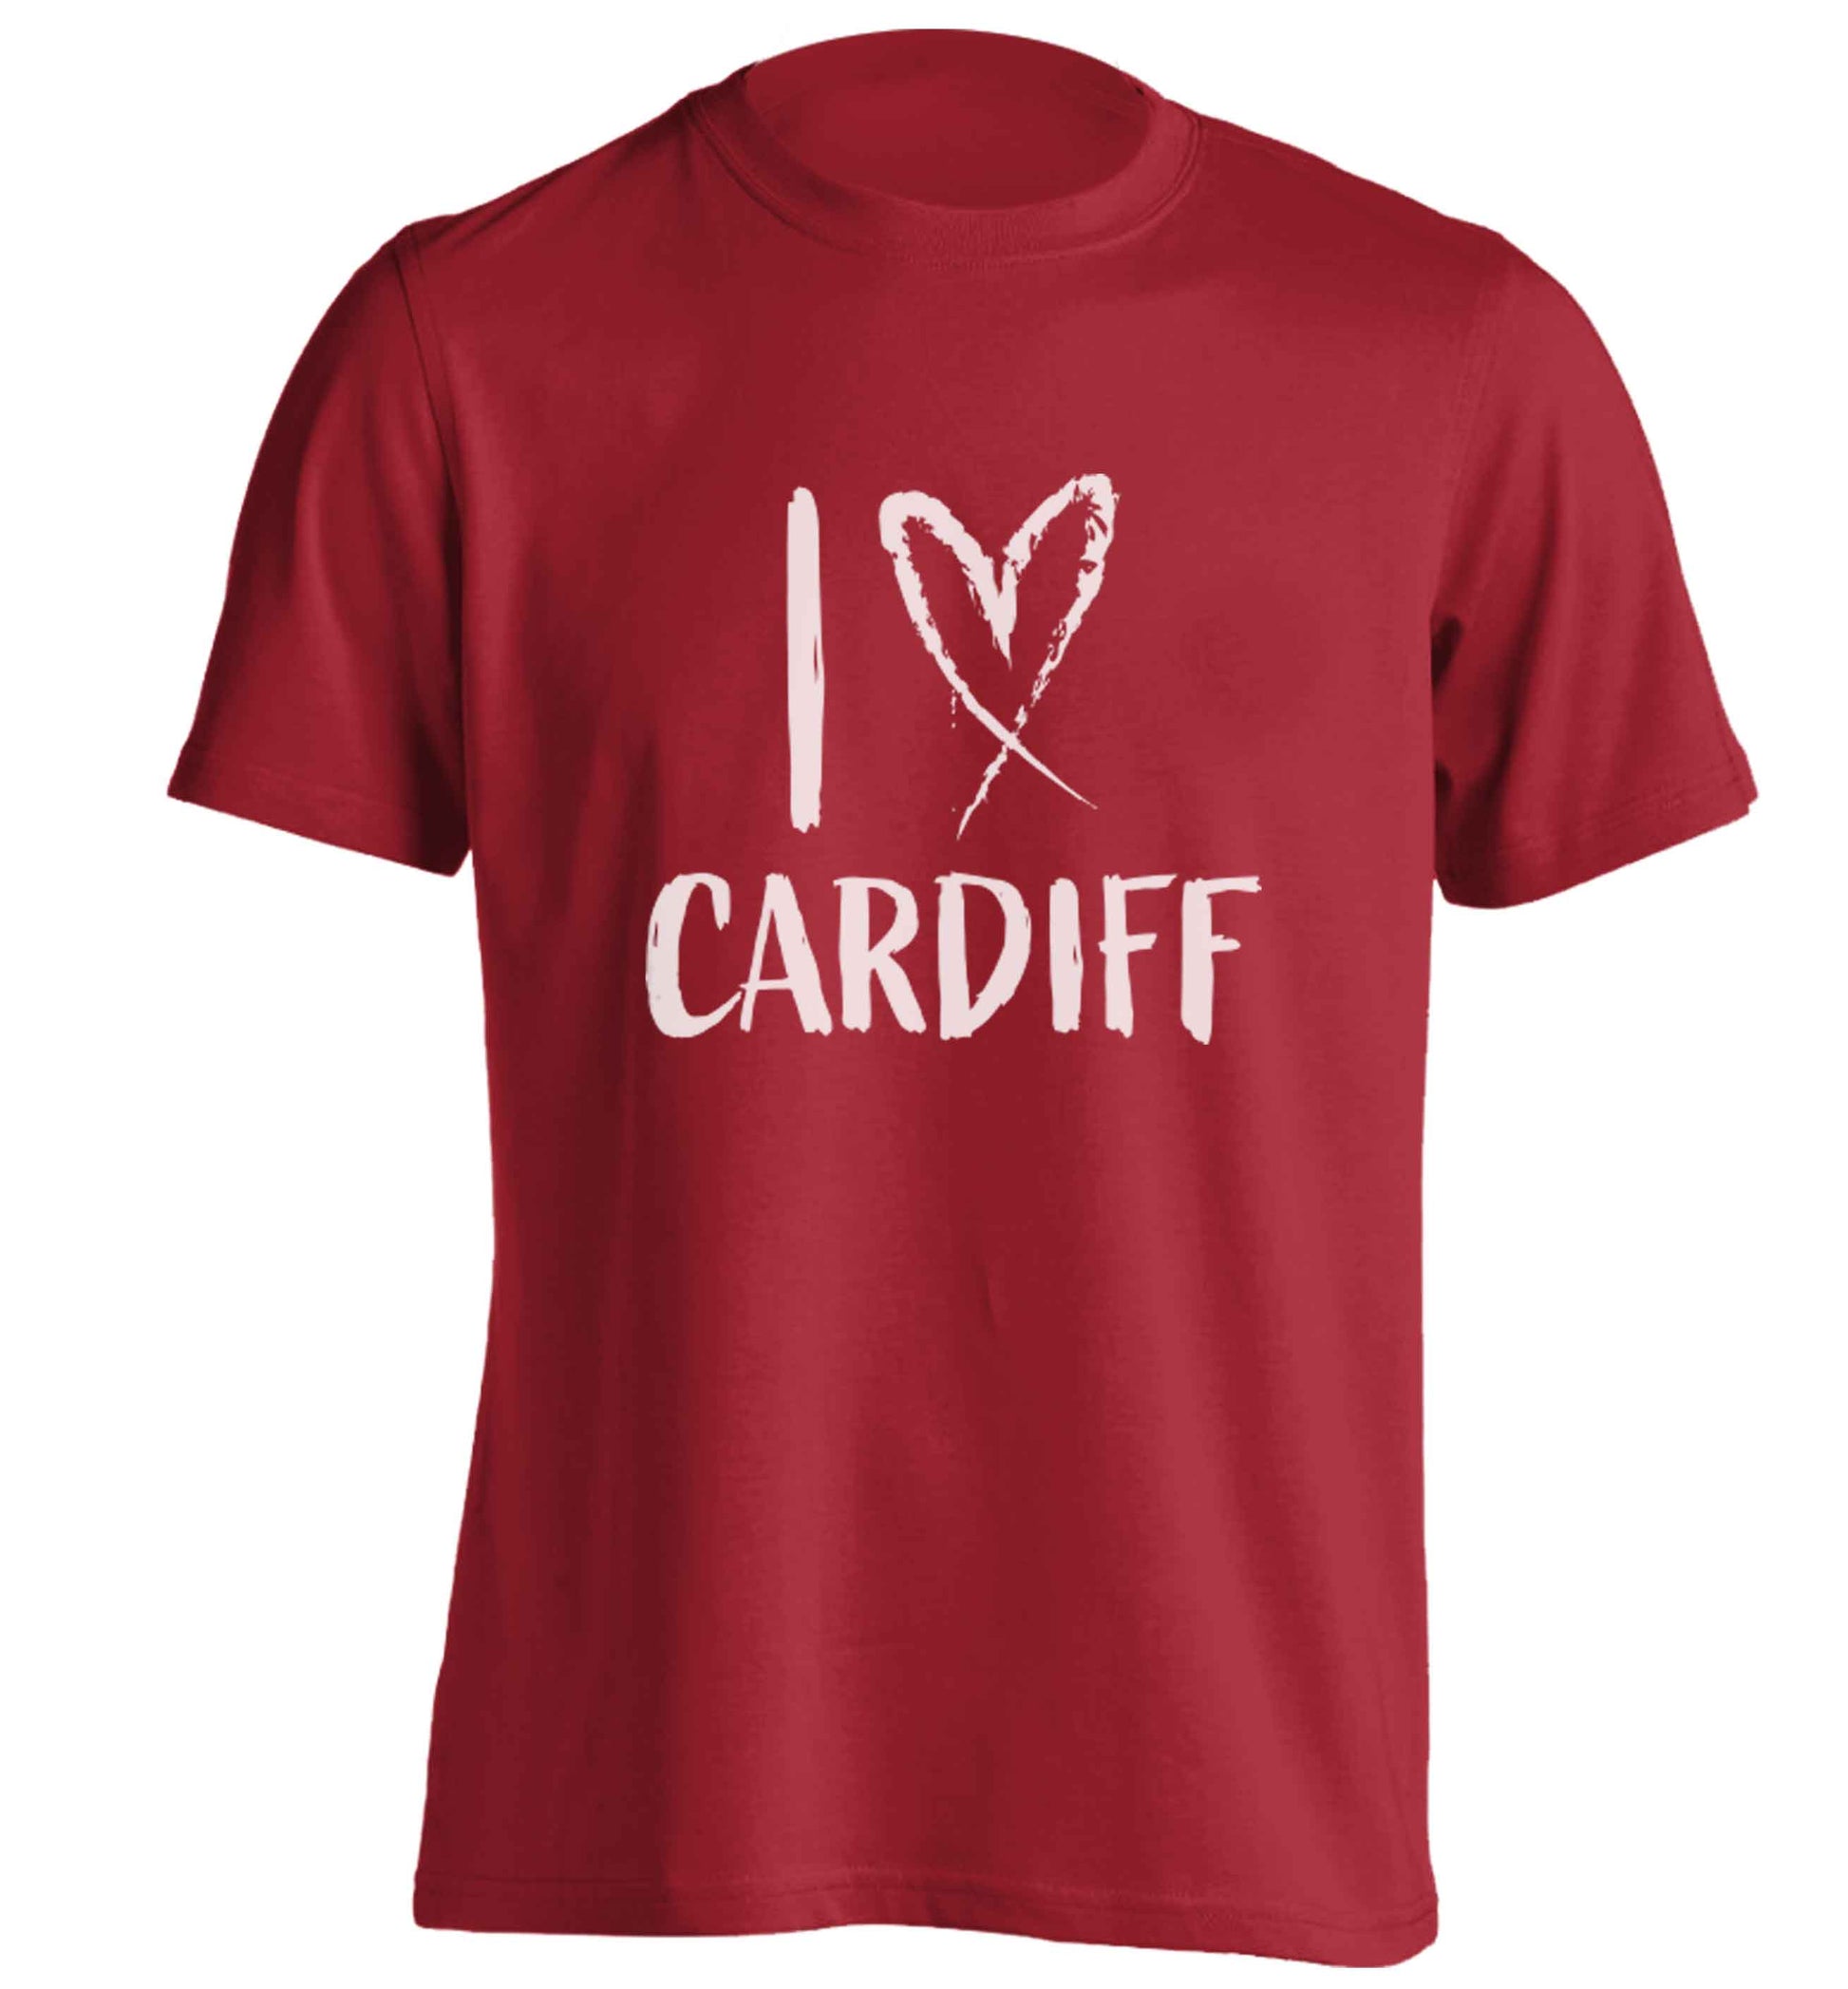 I love Cardiff adults unisex red Tshirt 2XL